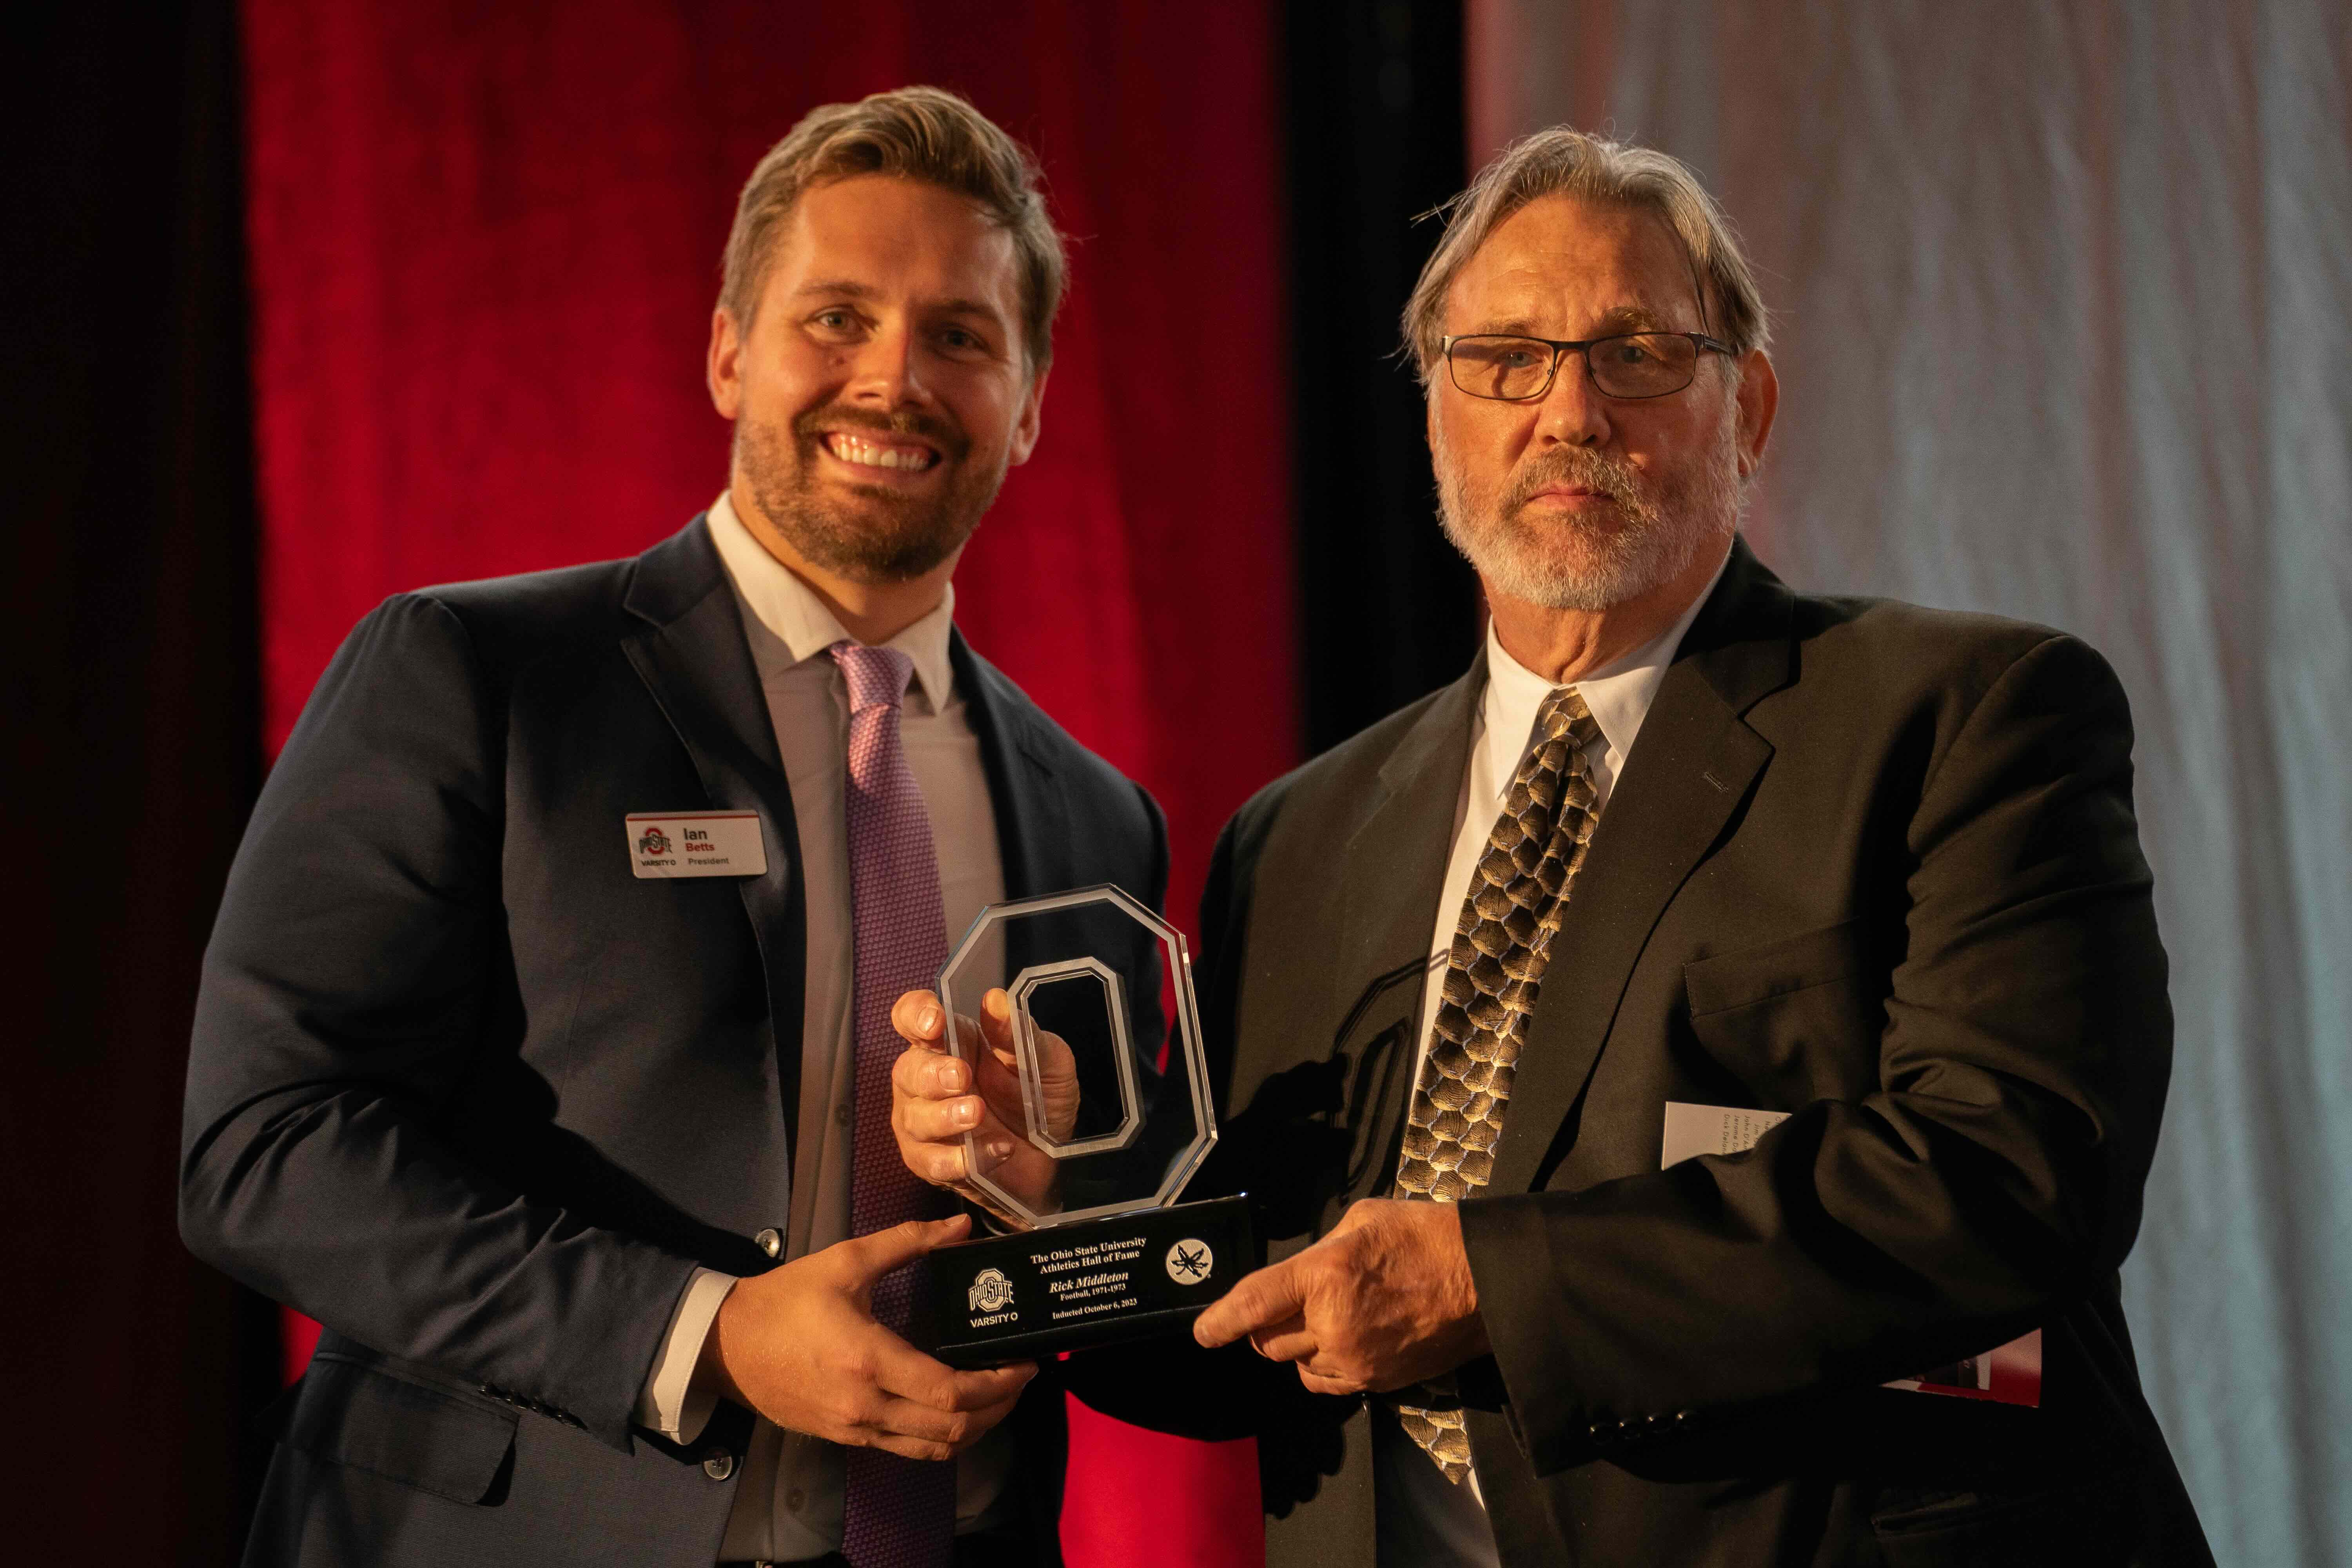 Ohio State Alumni Rick Middleton receiving an award from the university